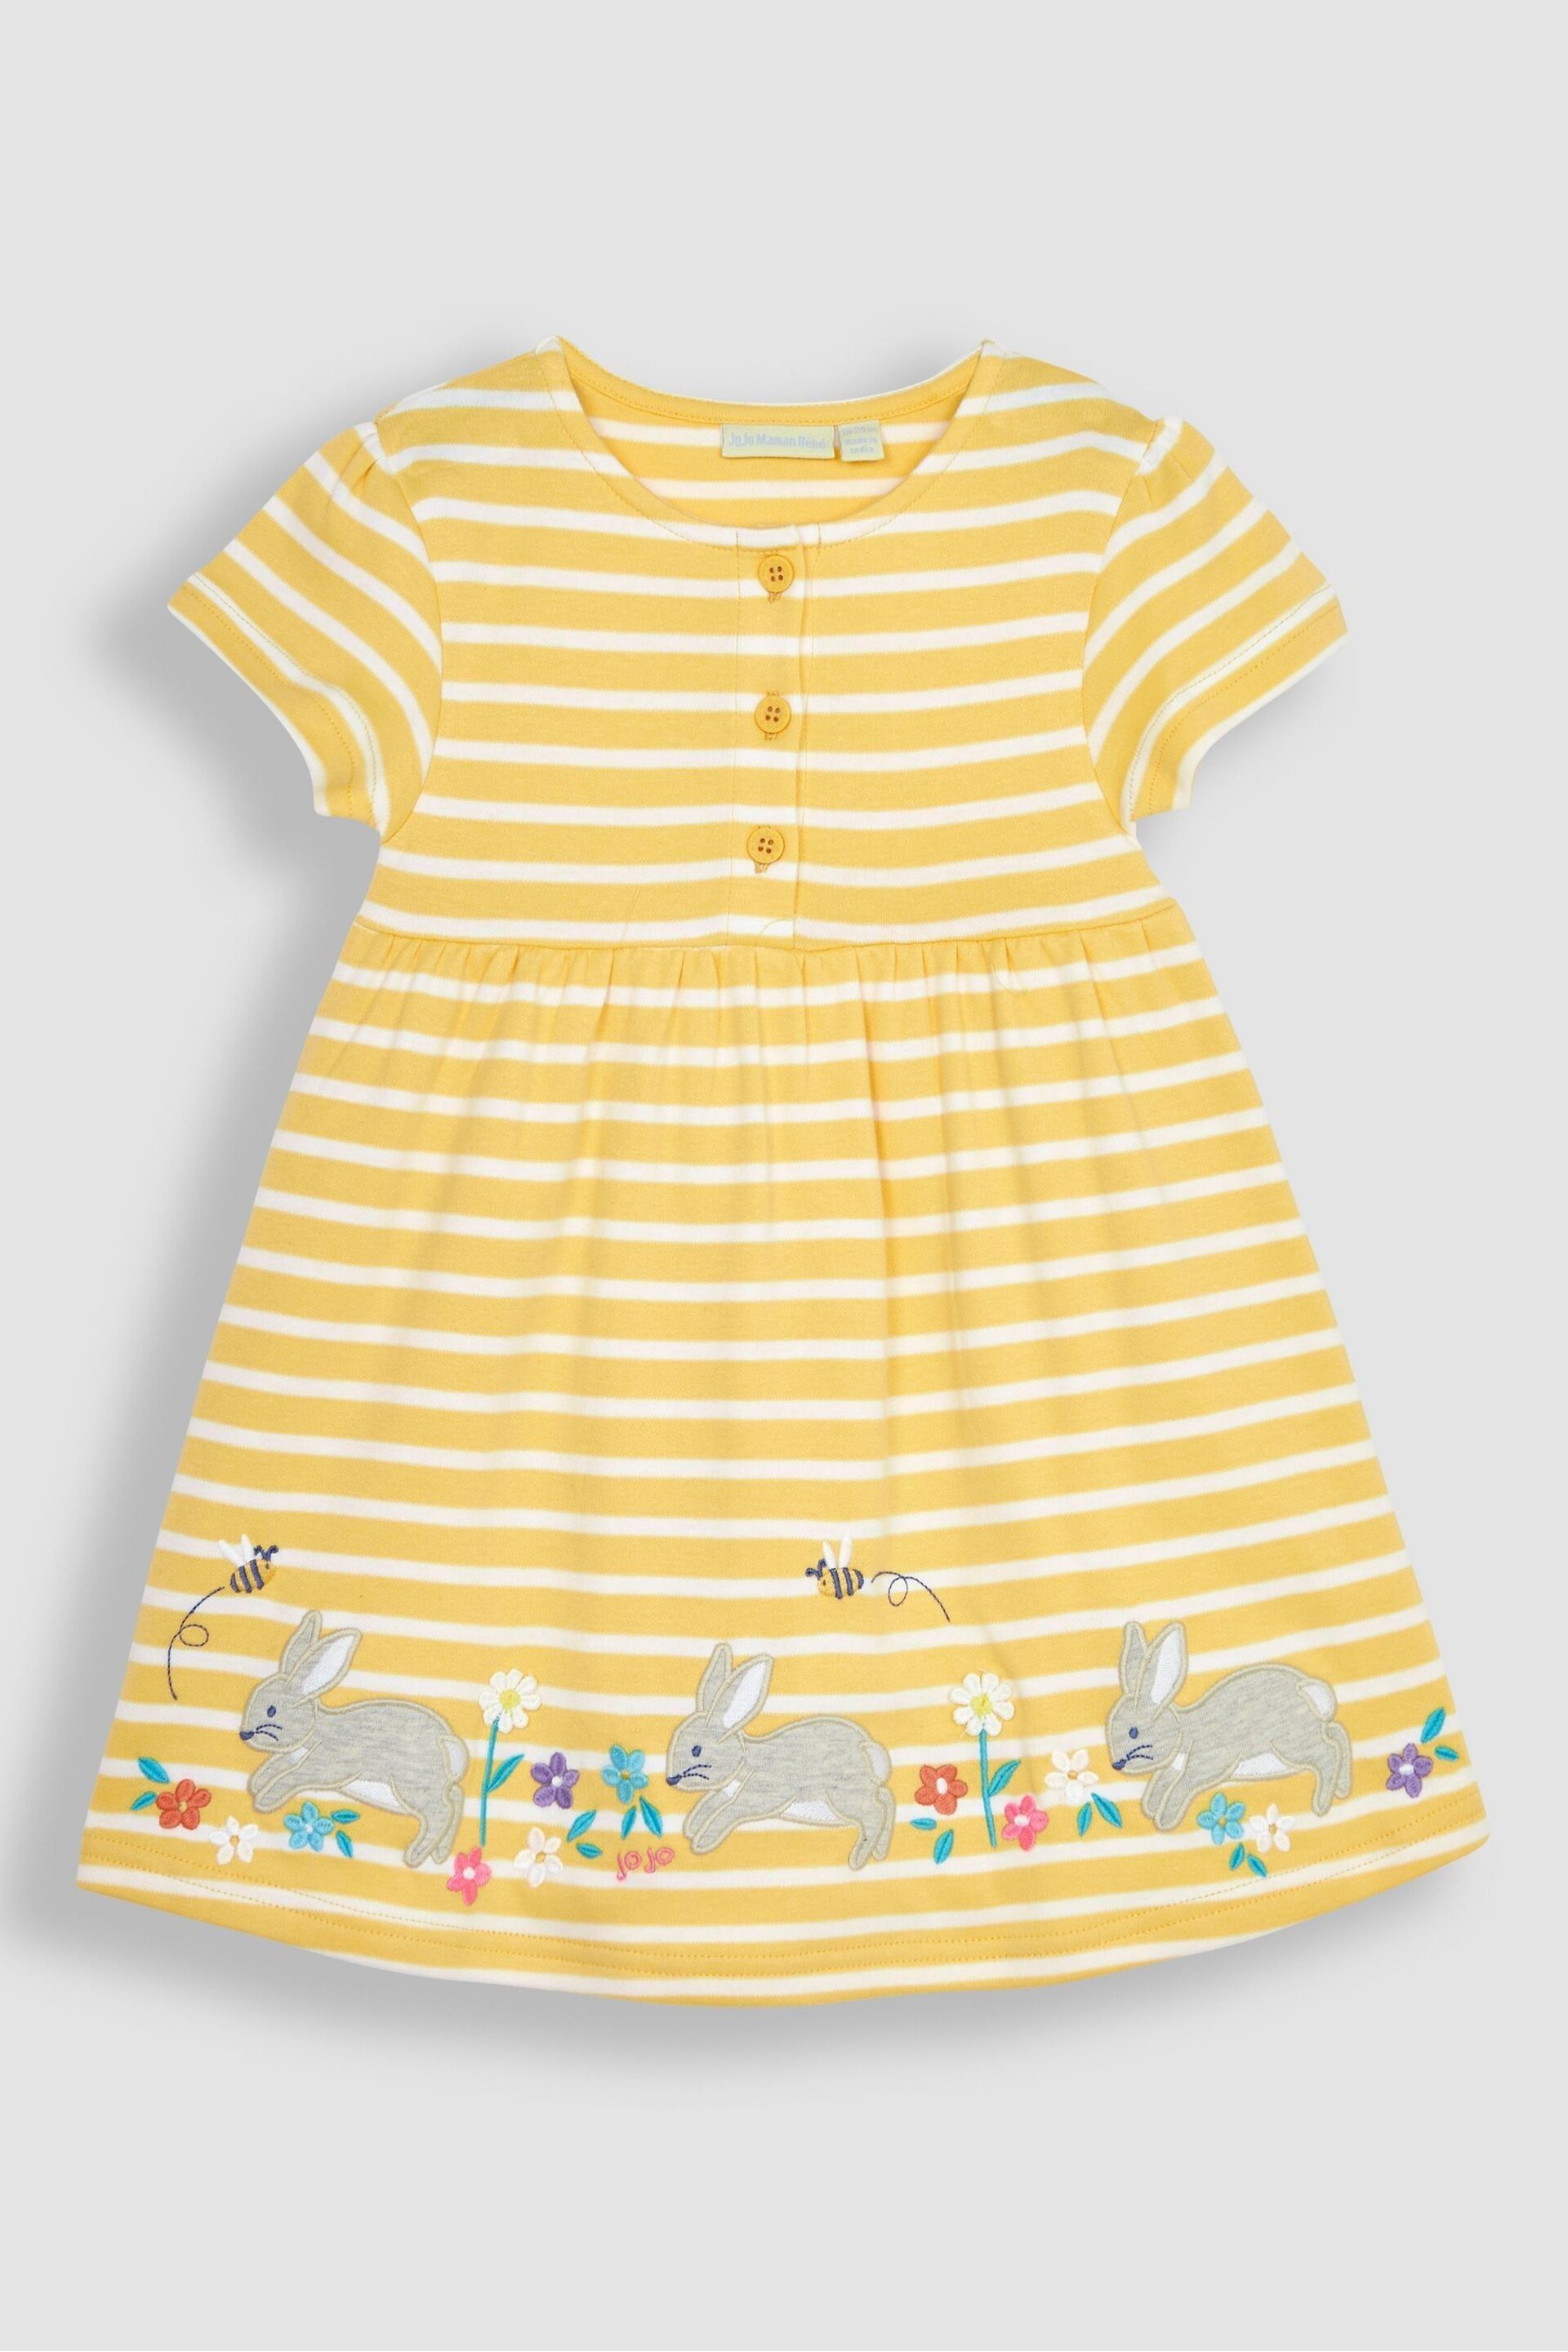 JoJo Maman Bébé Yellow Bunny Stripe Appliqué Button Front Jersey Dress - Image 3 of 5